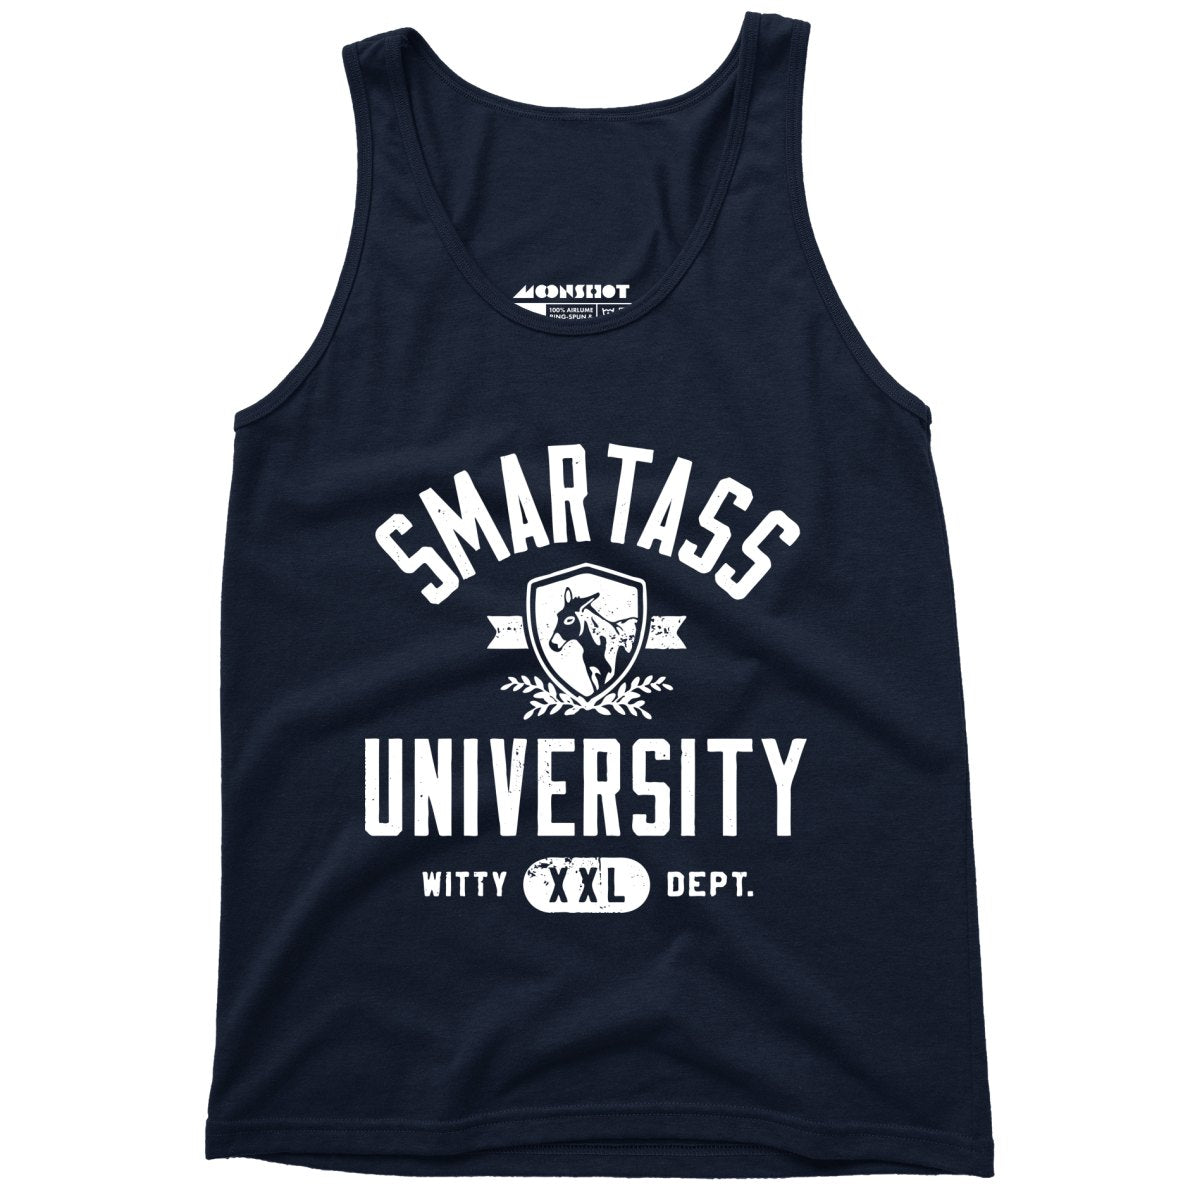 Smartass University - Unisex Tank Top